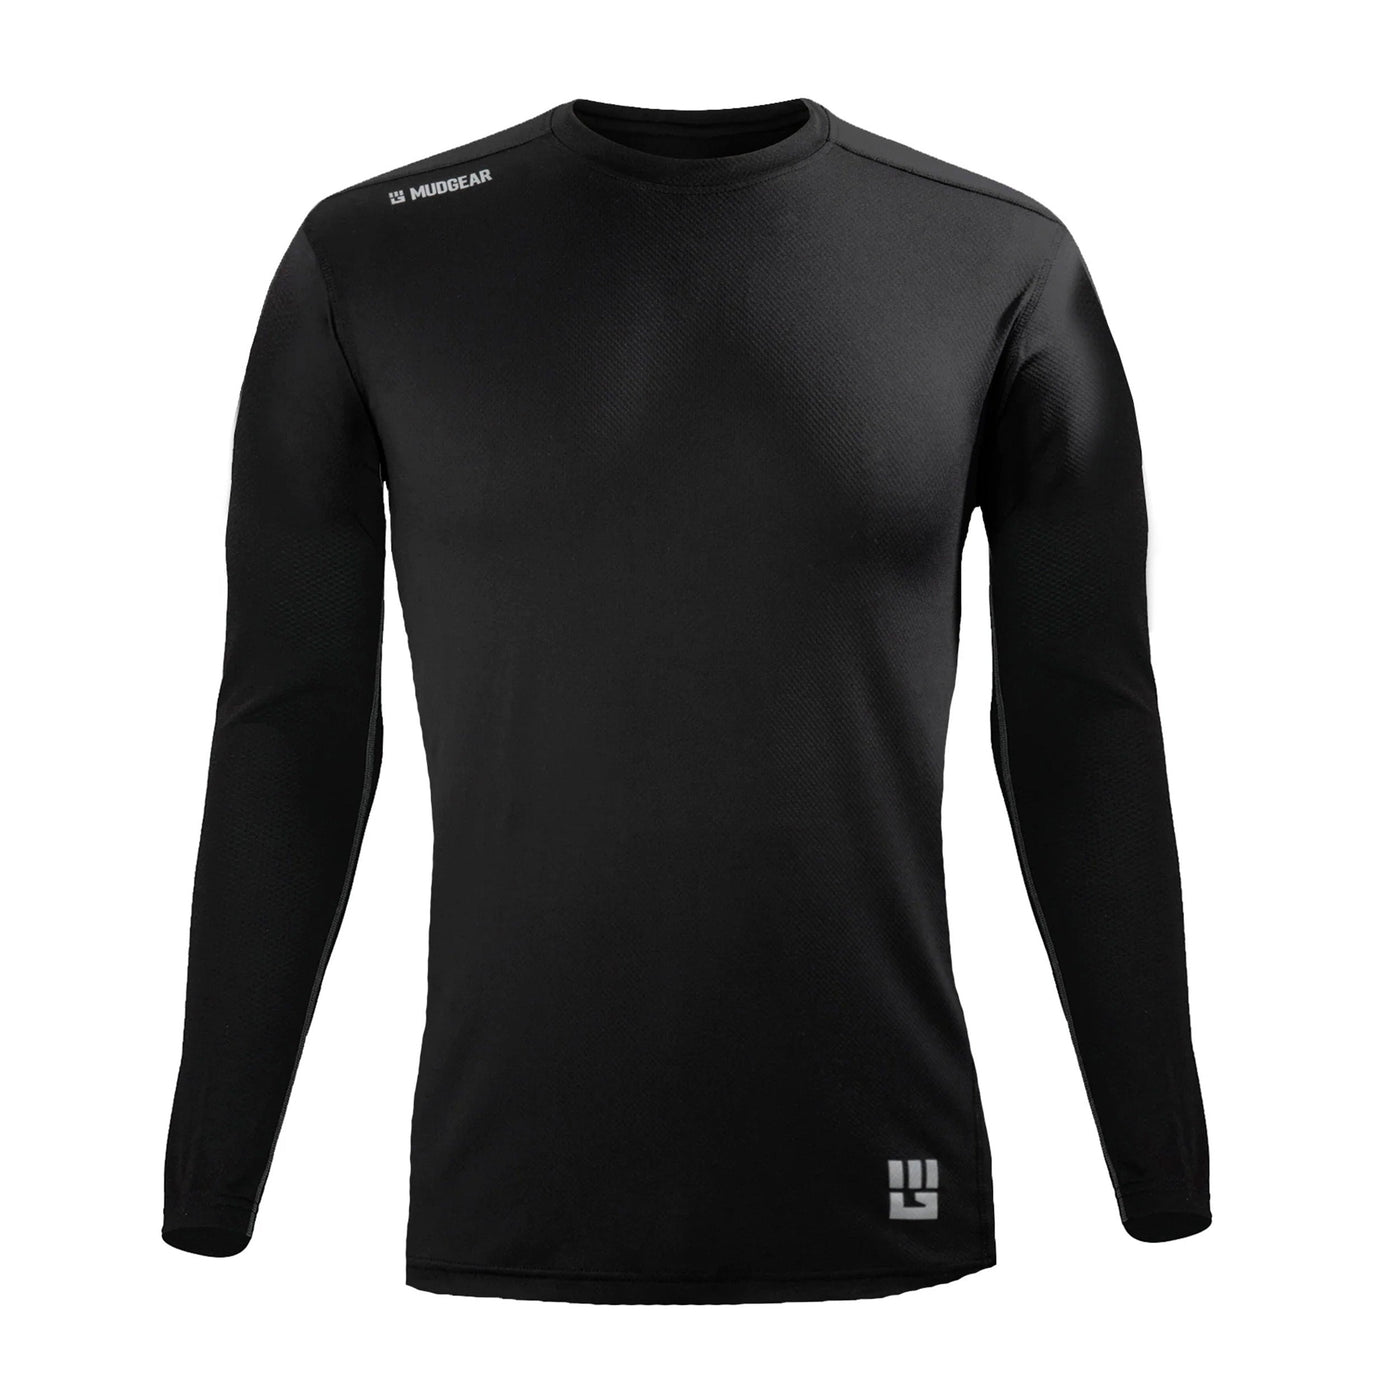 MudGear Men's Fitted Performance Shirt VX - Long Sleeve (Black)